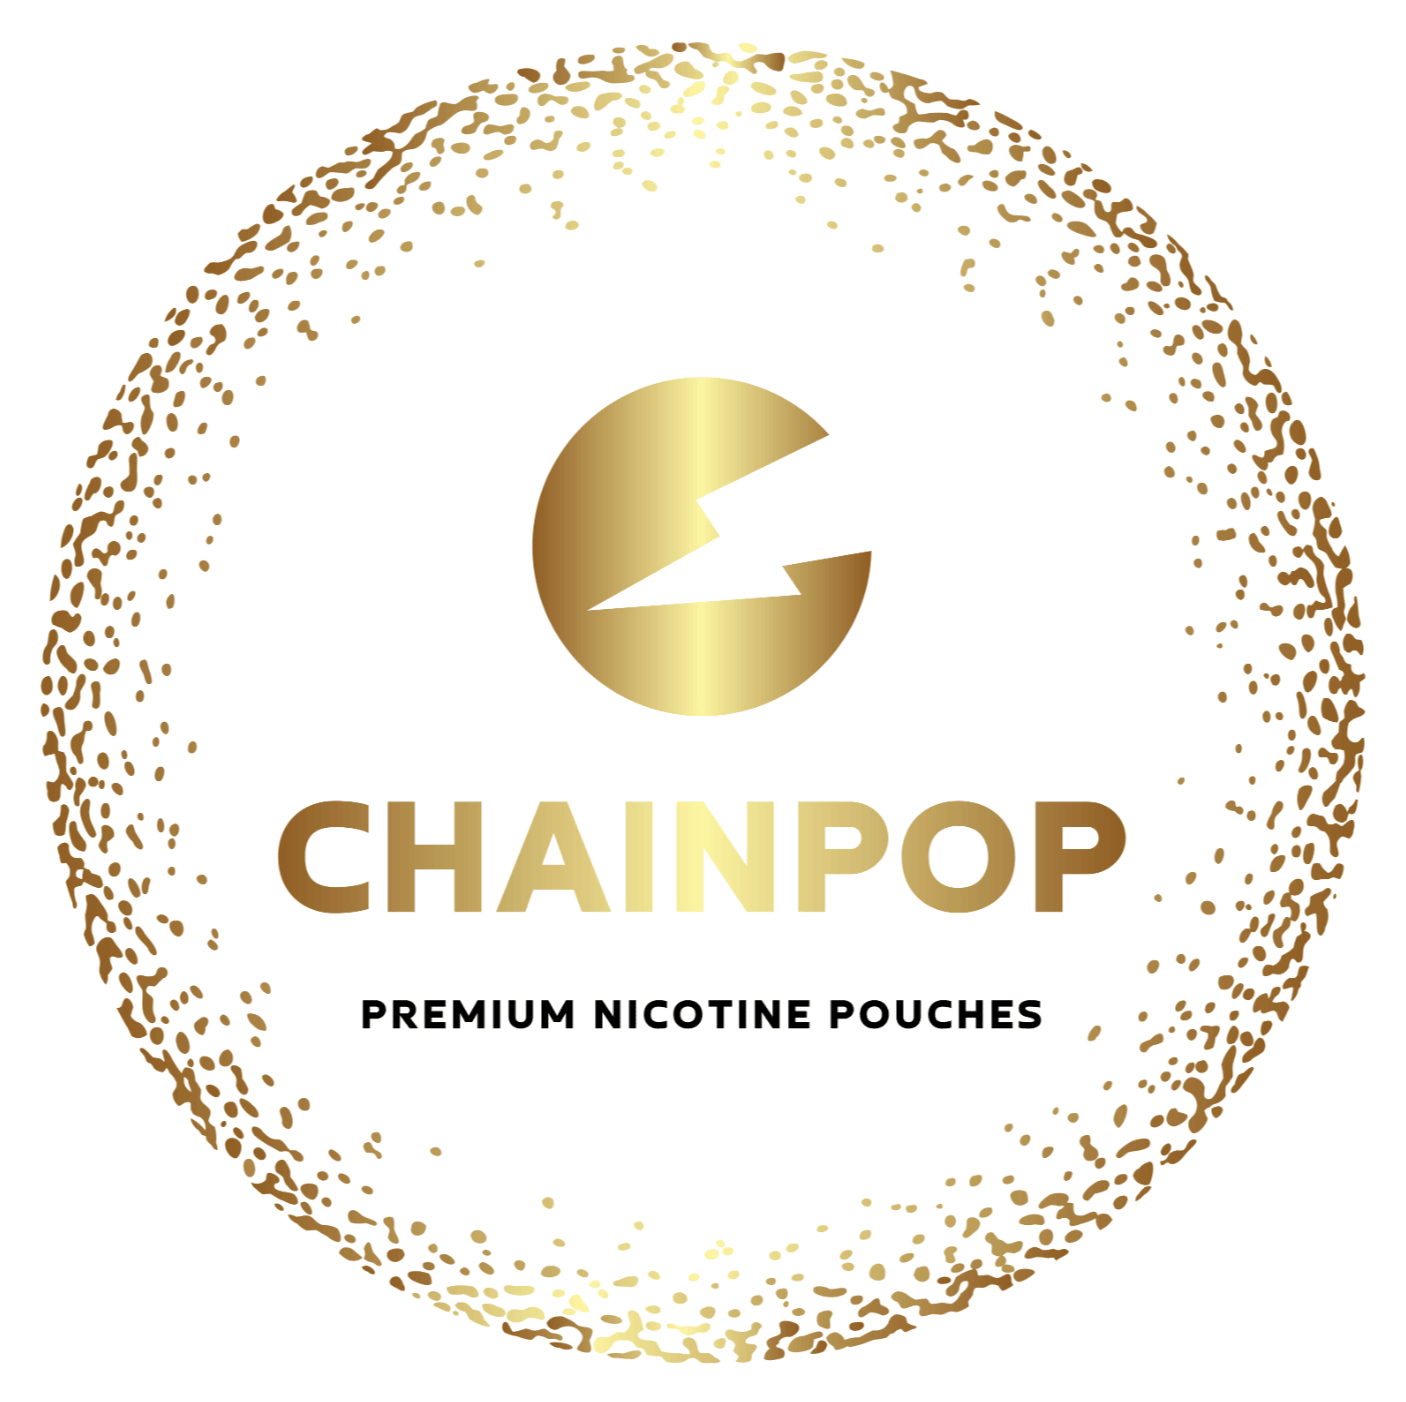 Chainpop nikotīna maisiņi logo